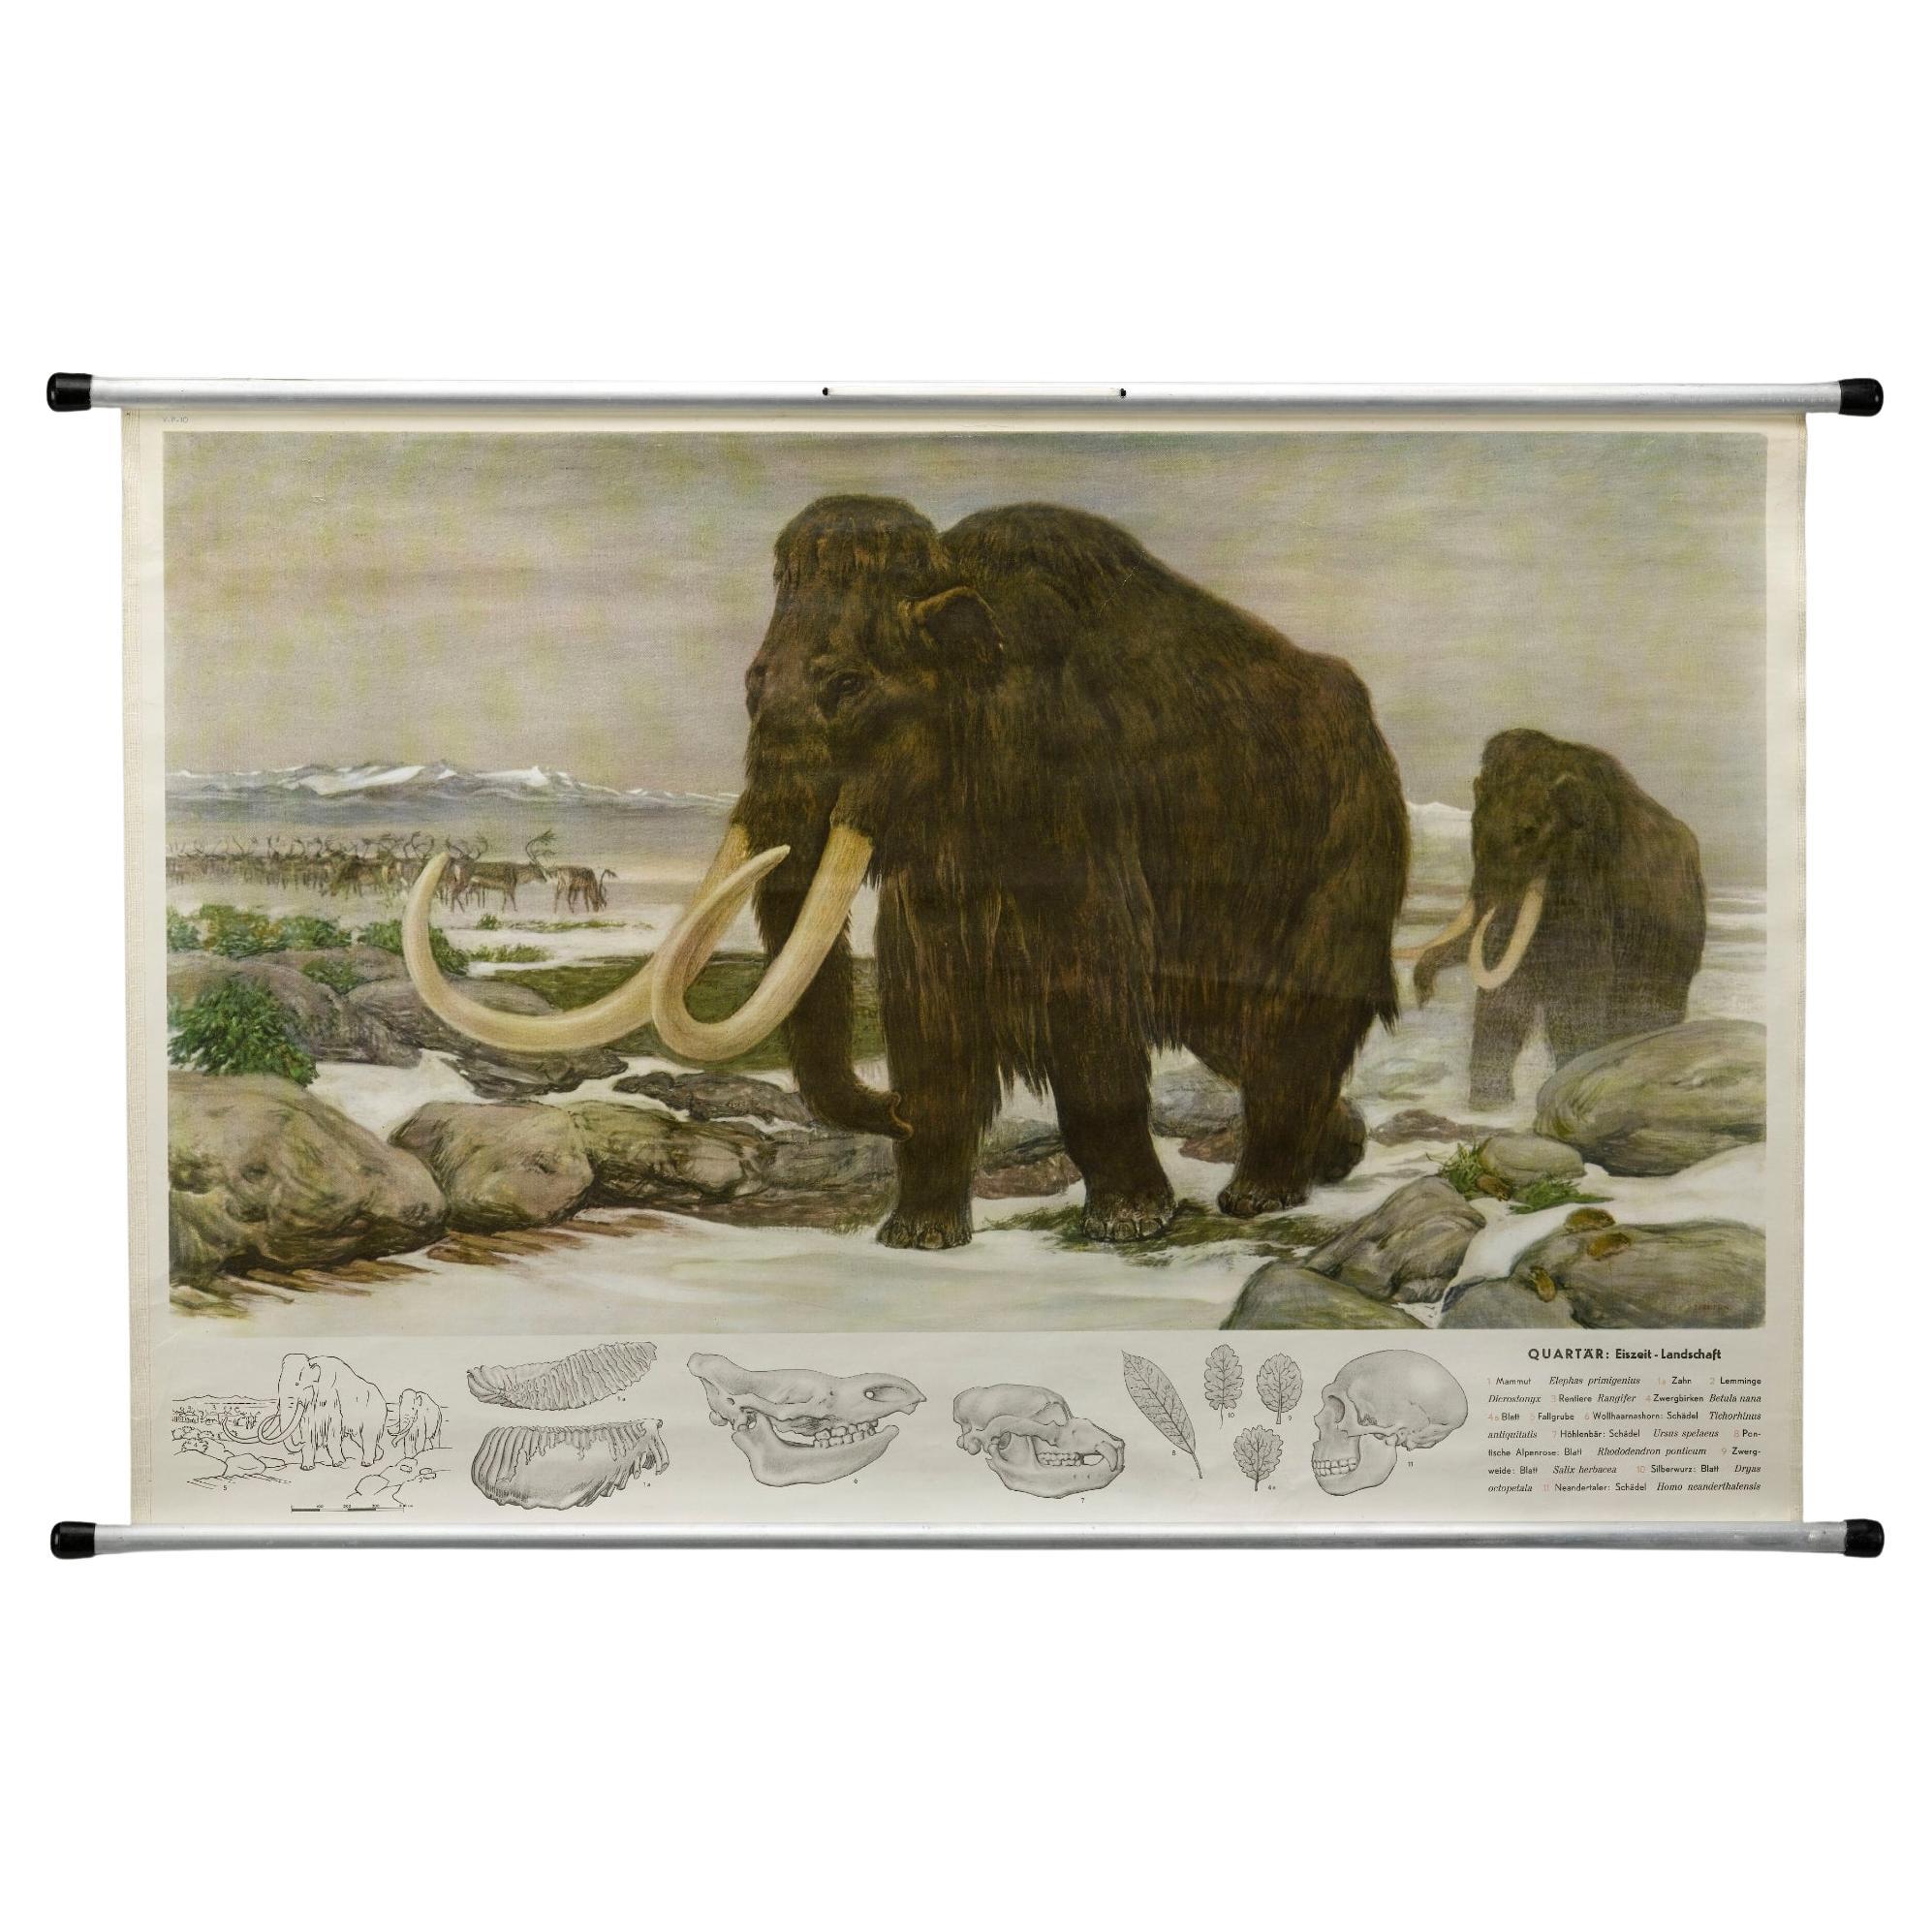 1955 „Quaternary: Ice-Age Landscape“ Wolle Mammoth Vintage Wandbehang  im Angebot